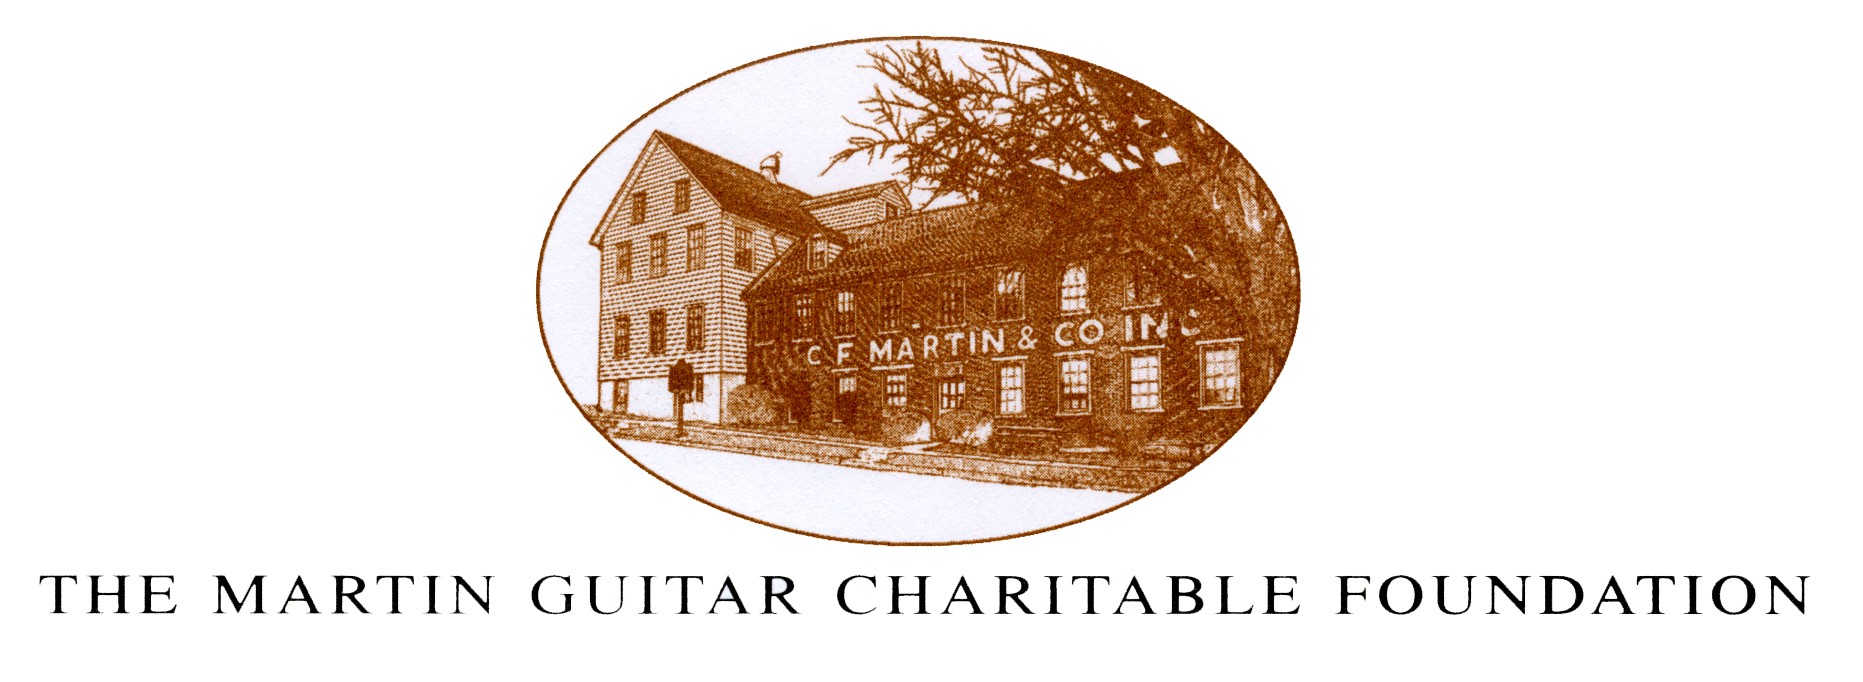 The Martain Guitar Charitable Foundation